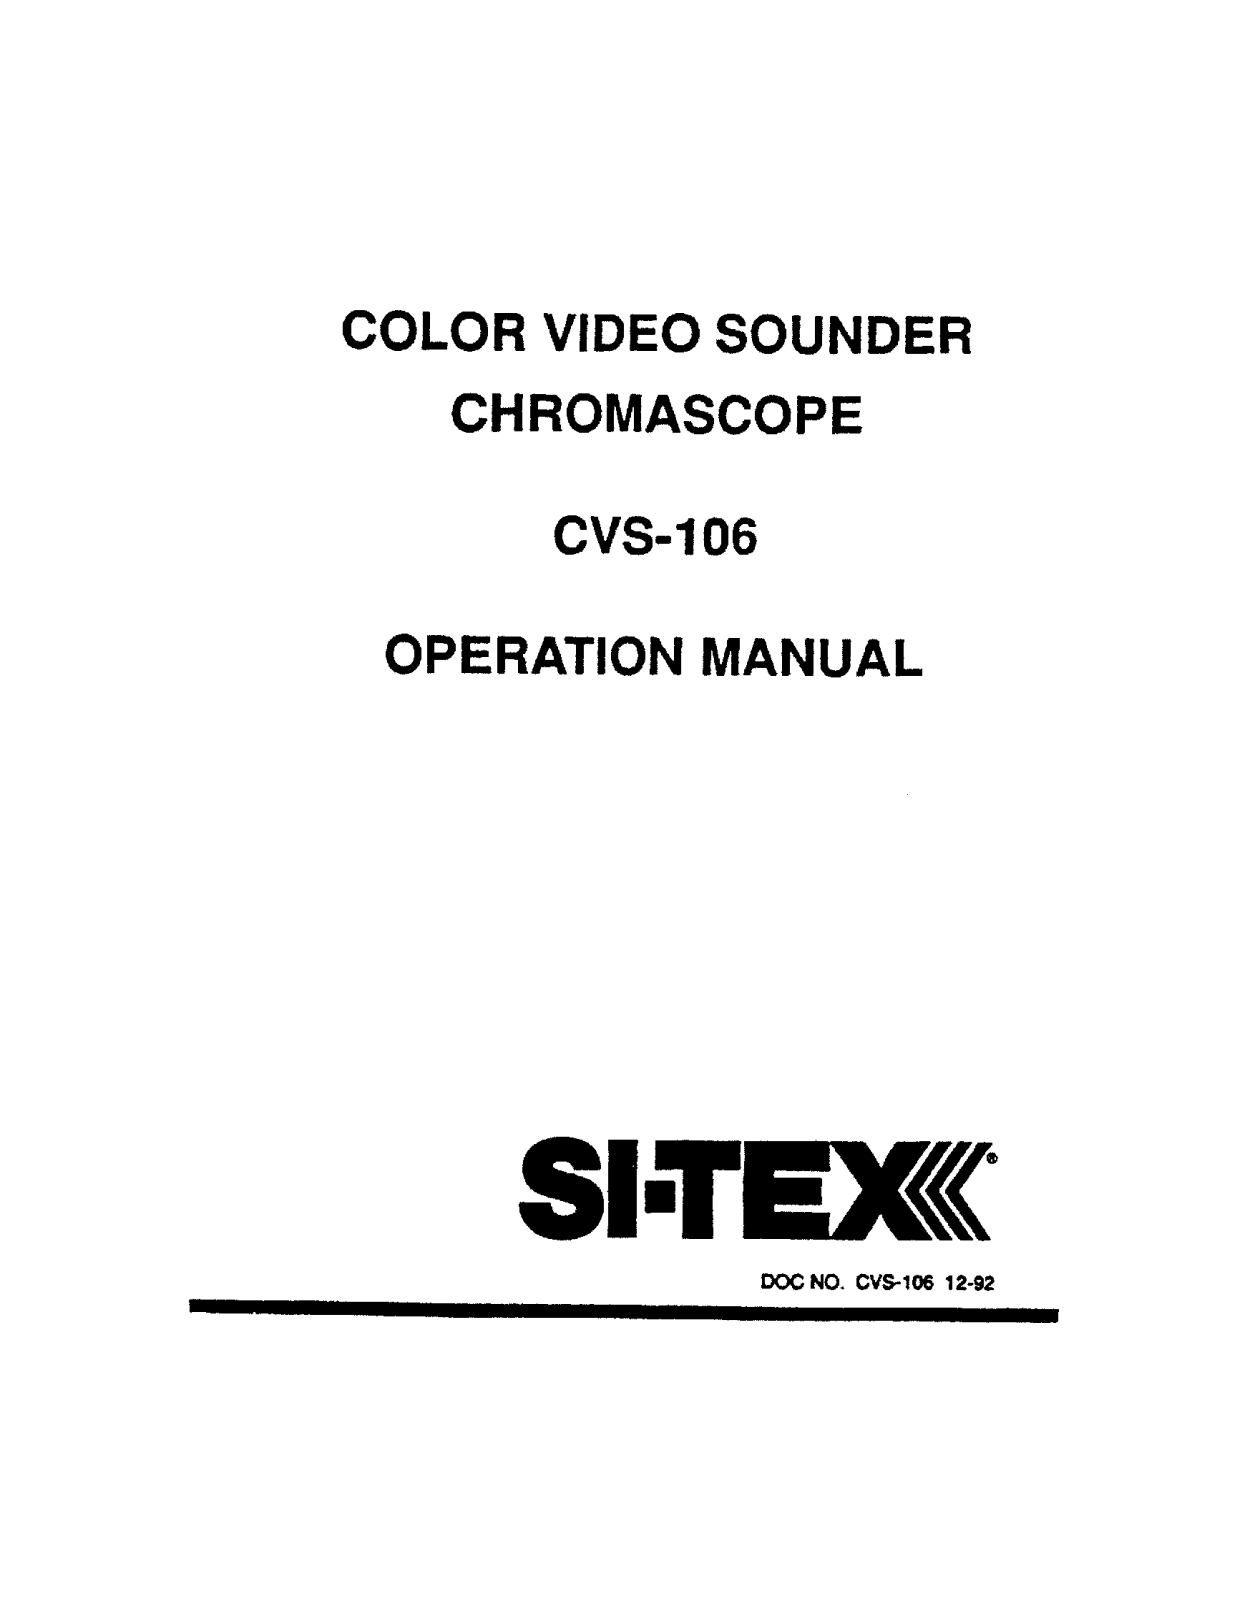 Si-tex CVS-106 User's Manual